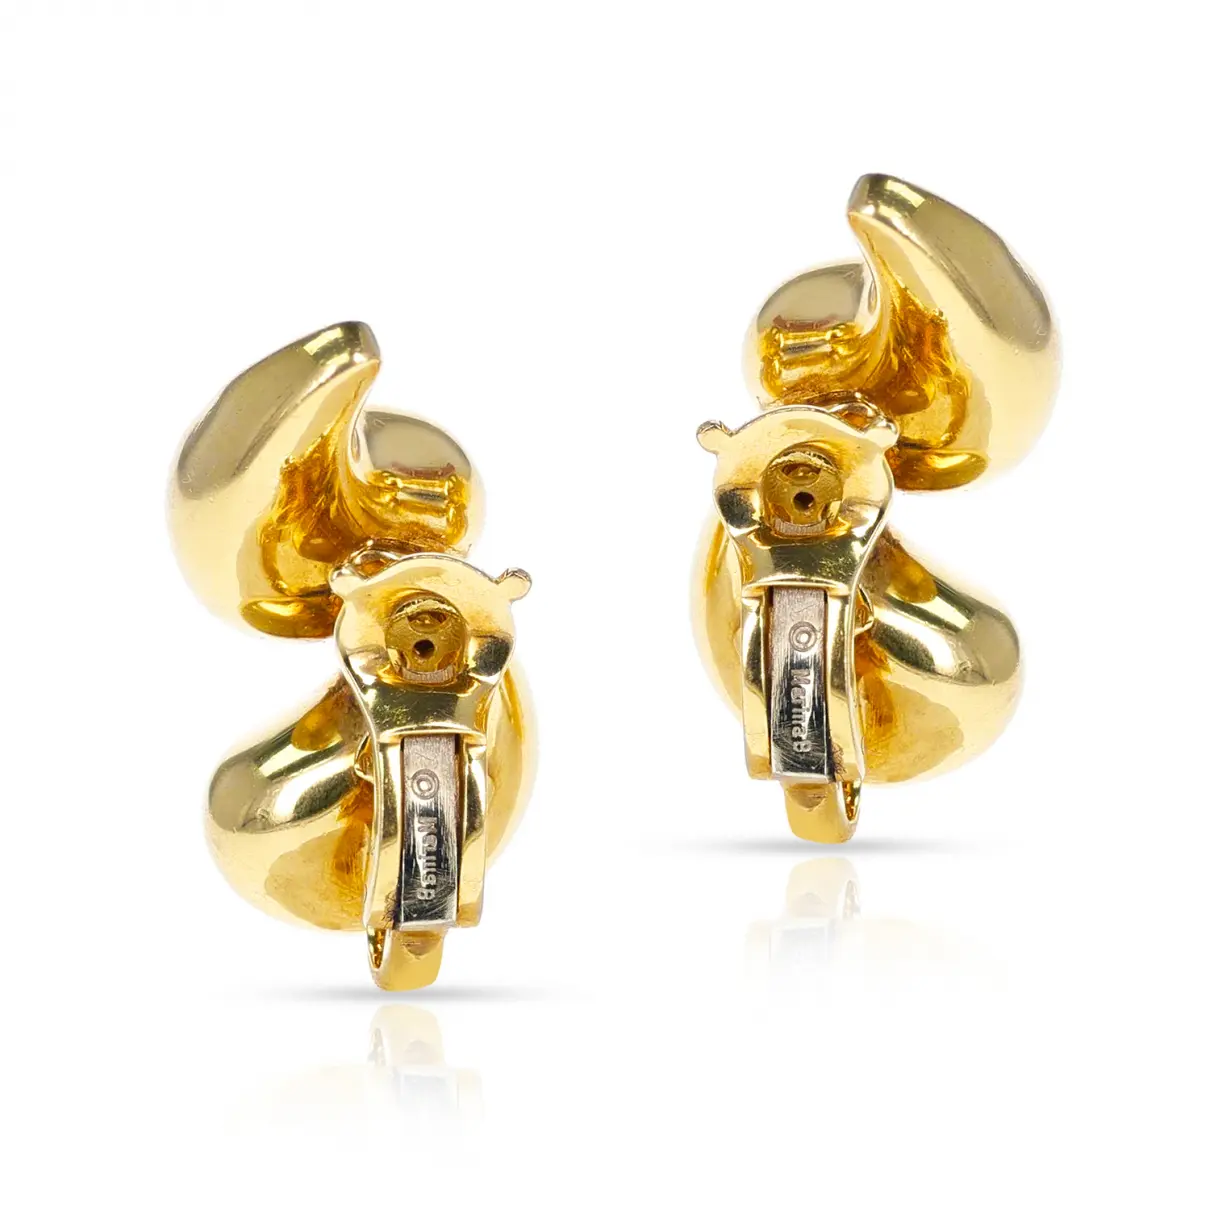 Buy Marina B Yellow gold earrings online